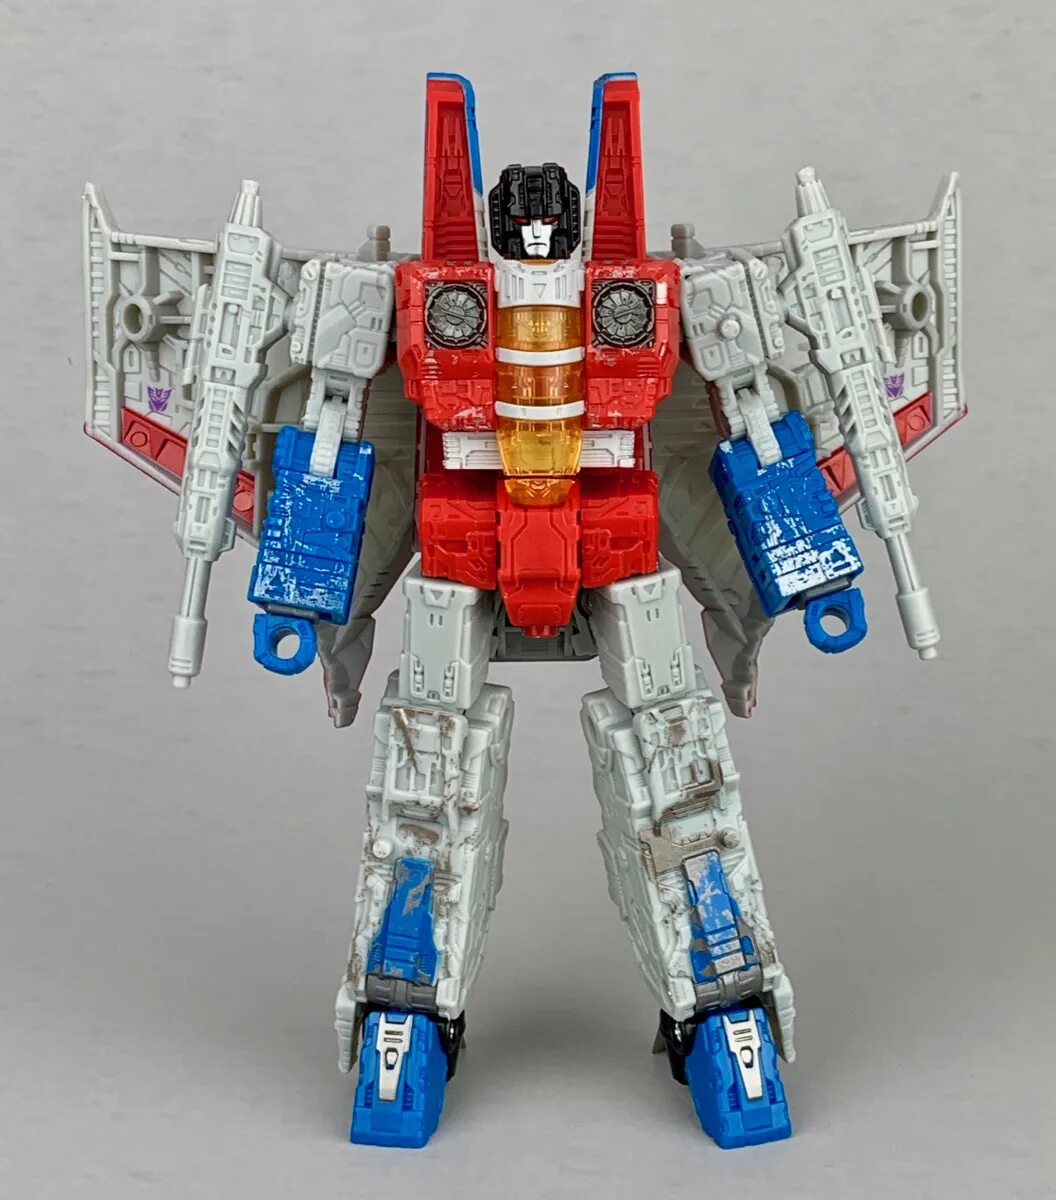 Transformers Siege Старскрим. Transformers Siege Starscream Toys. Starscream Transformers Hasbro leader. Siege Starscream.